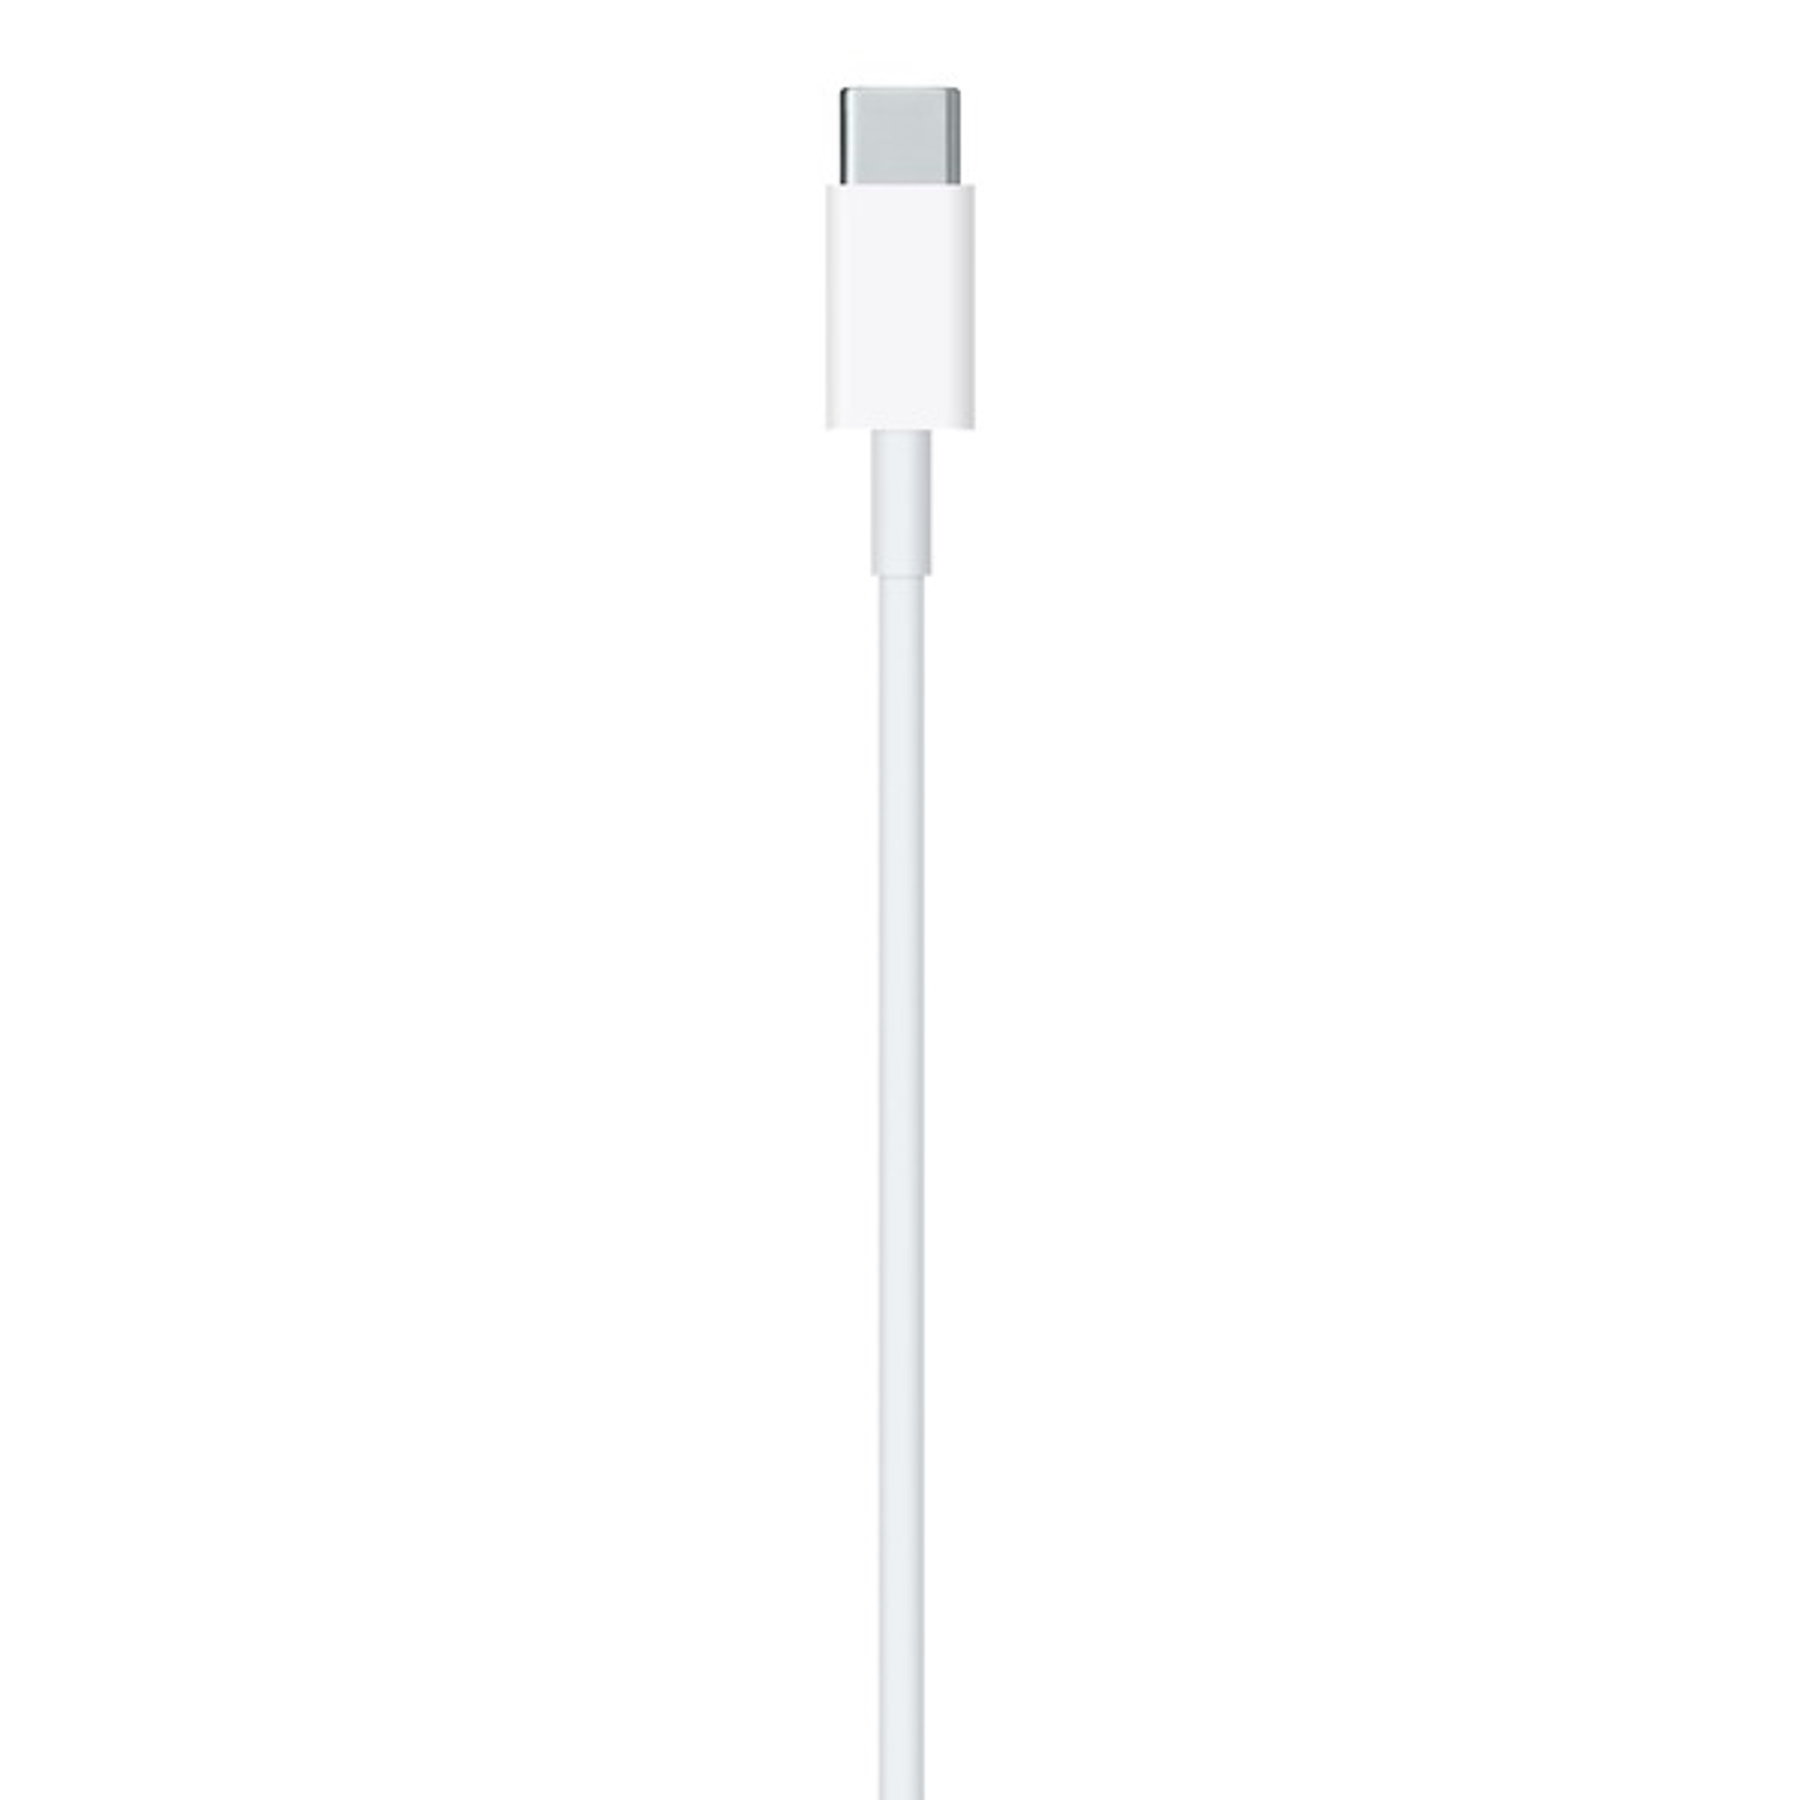 Apple Cable USB C a Lightning 1 Metro